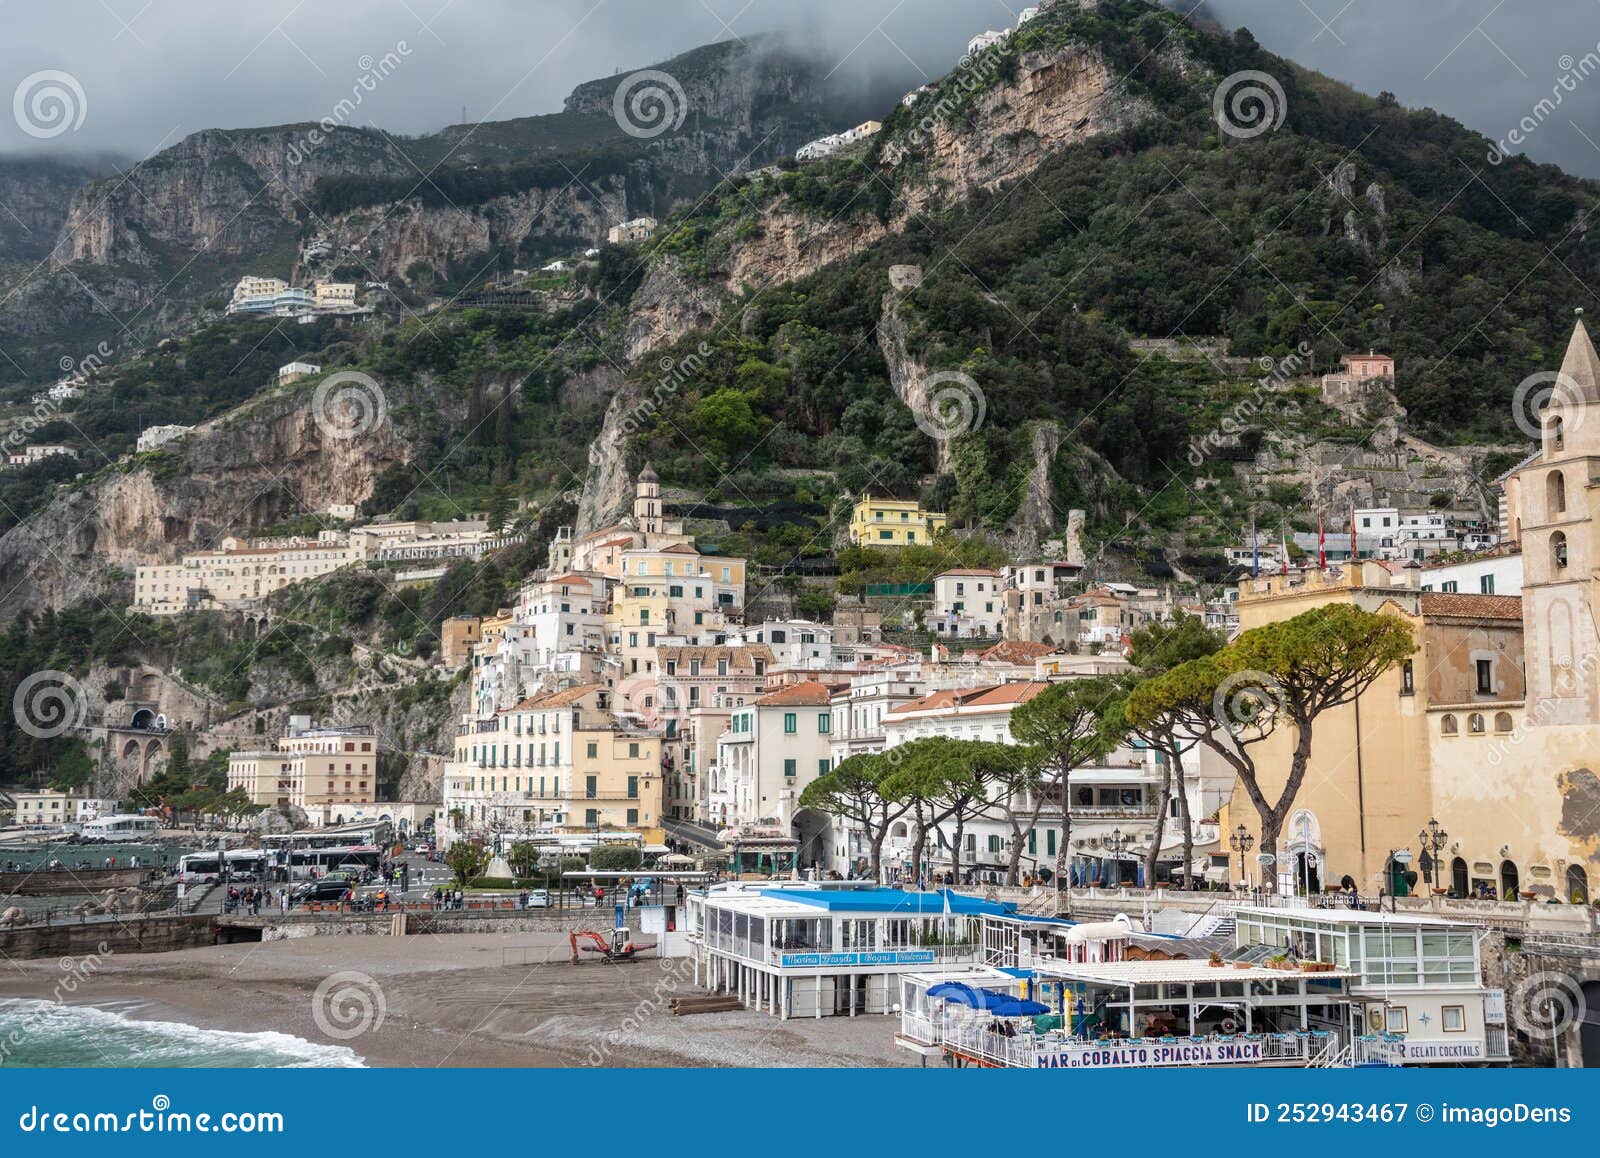 Coastal Cityscape of the City of Amalfi in Italy Stock Image - Image of ...